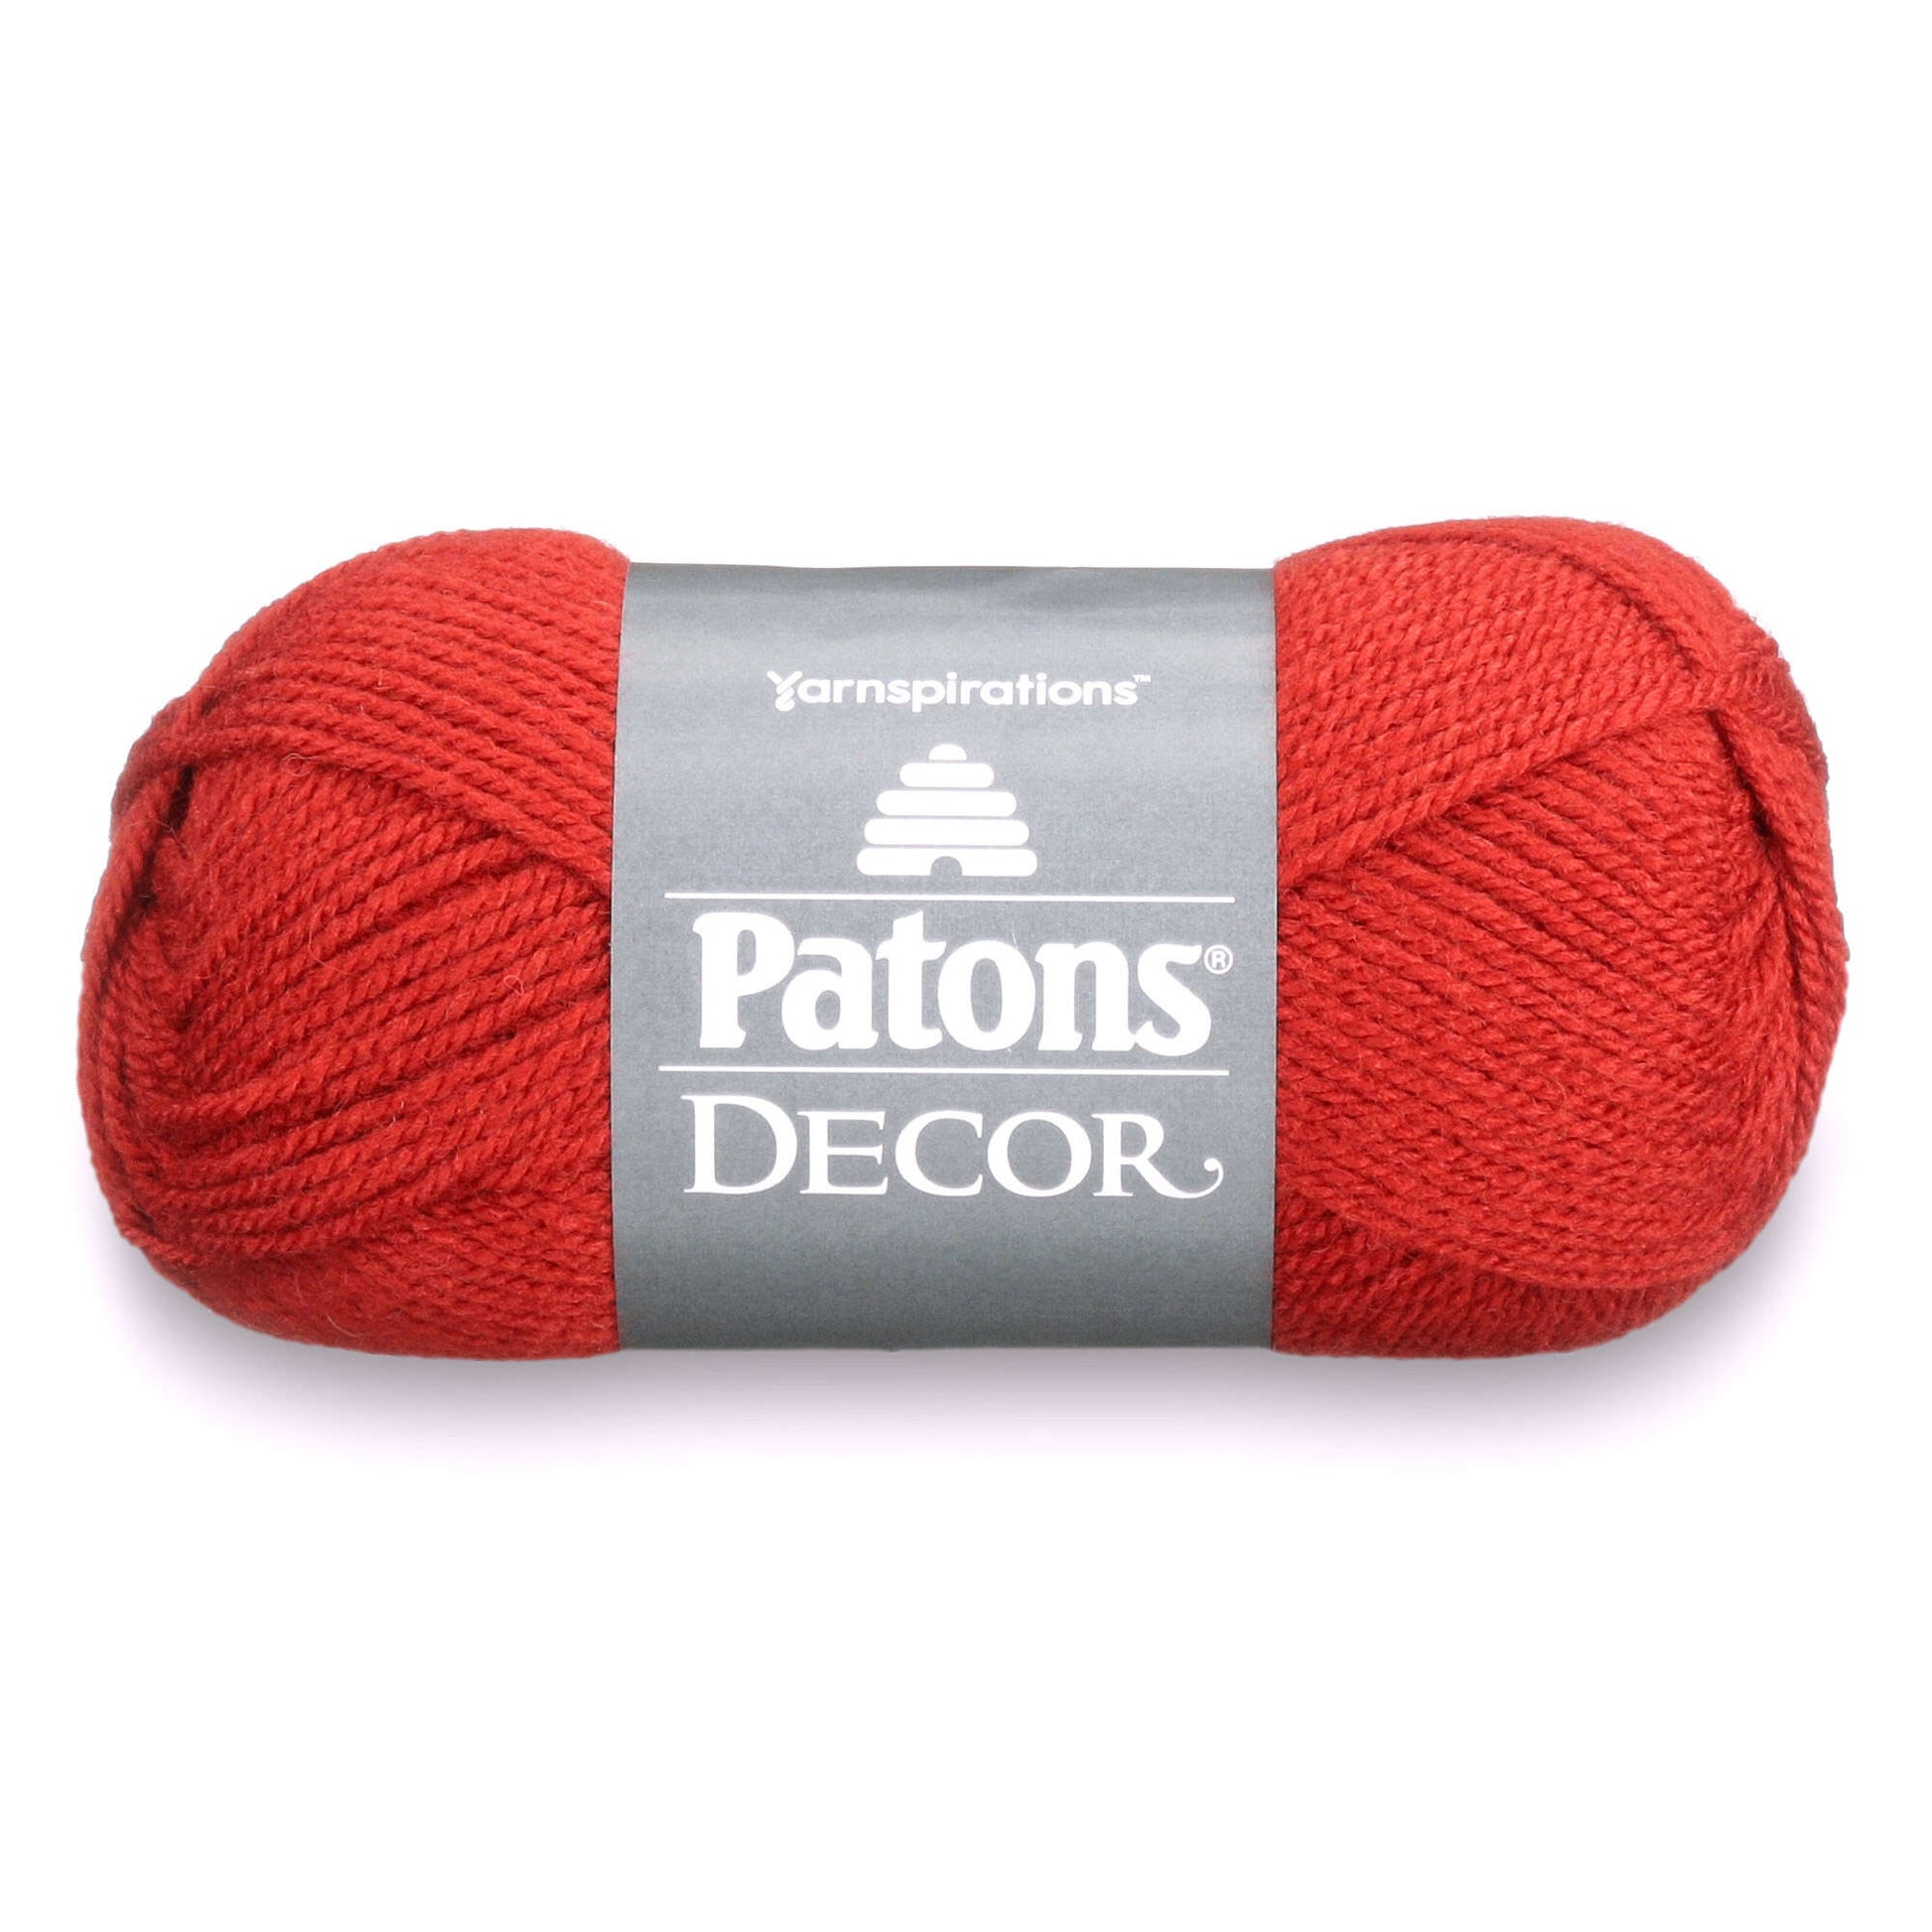 Patons Decor Yarn - Discontinued Shades